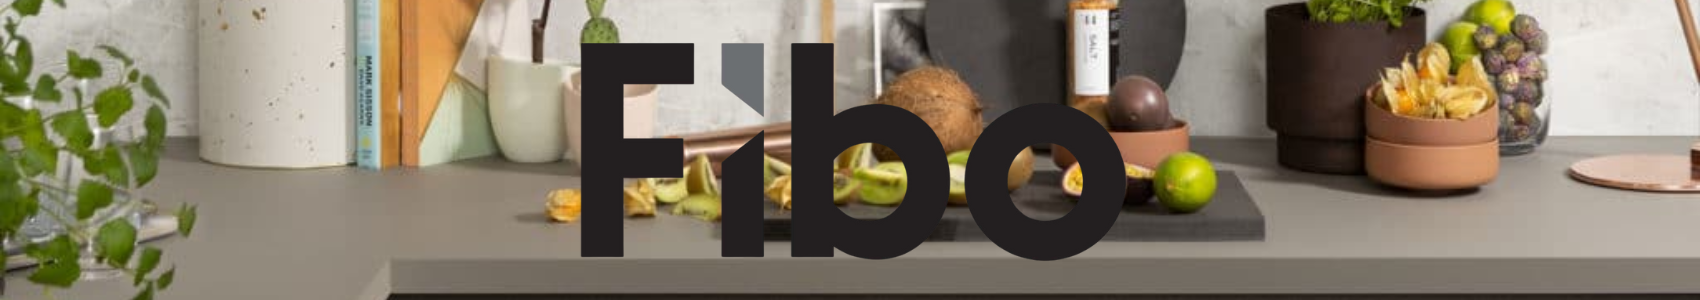 Fibo logo banner